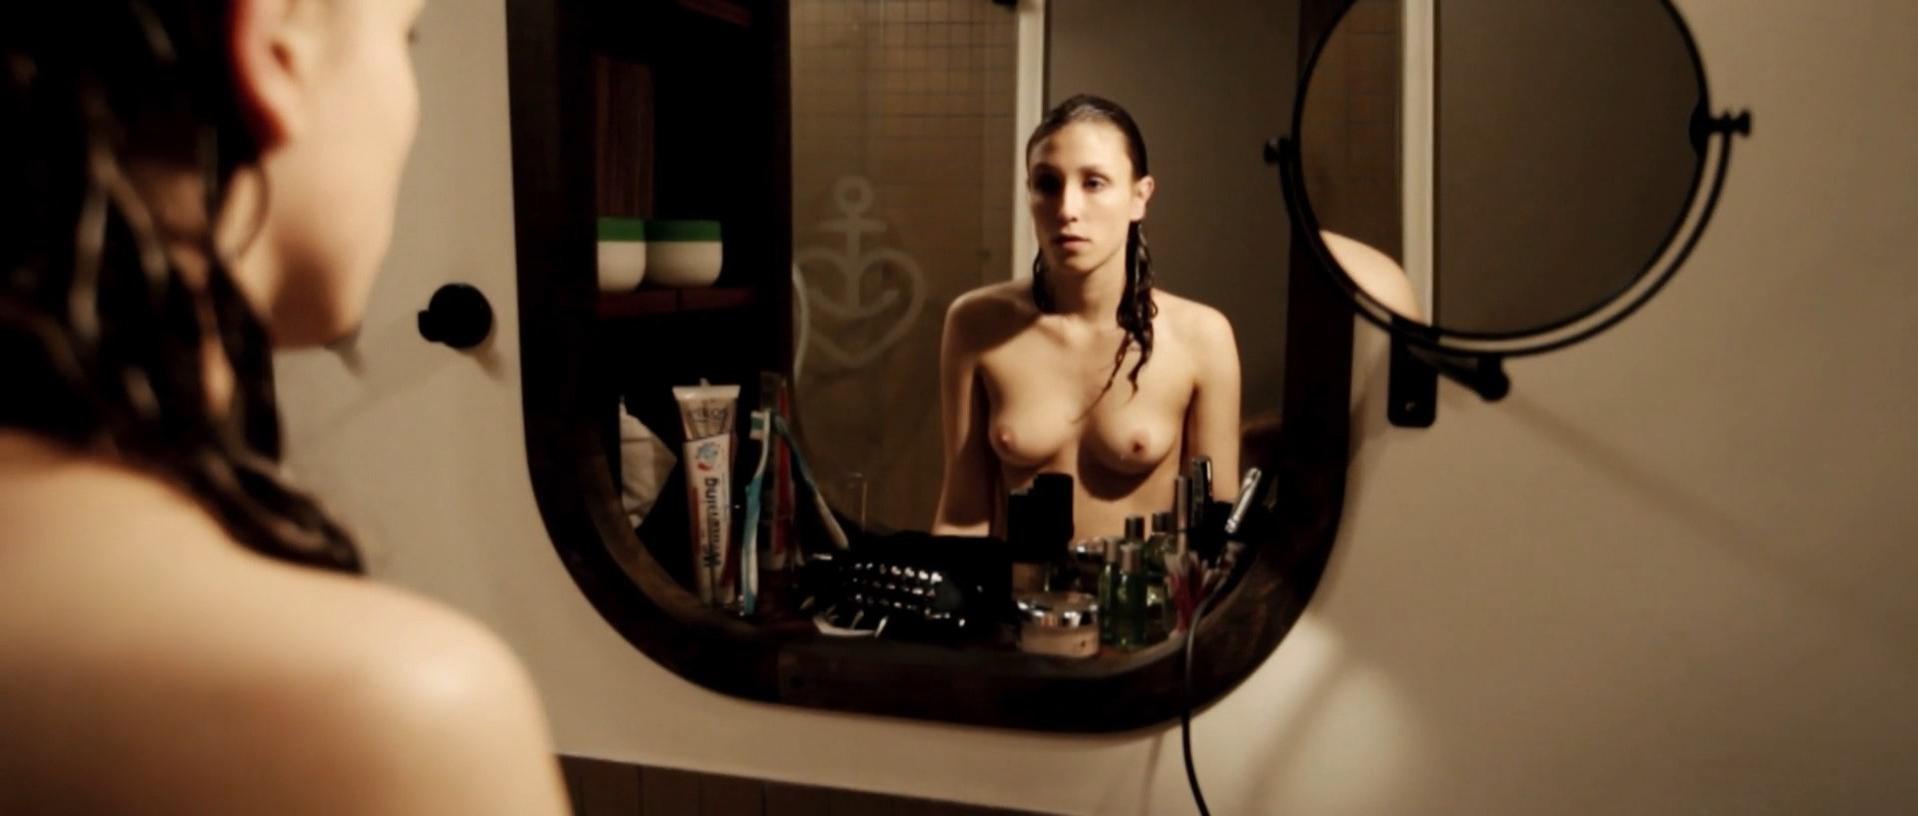 Lena Steisslinger nude - Roulette (2013)